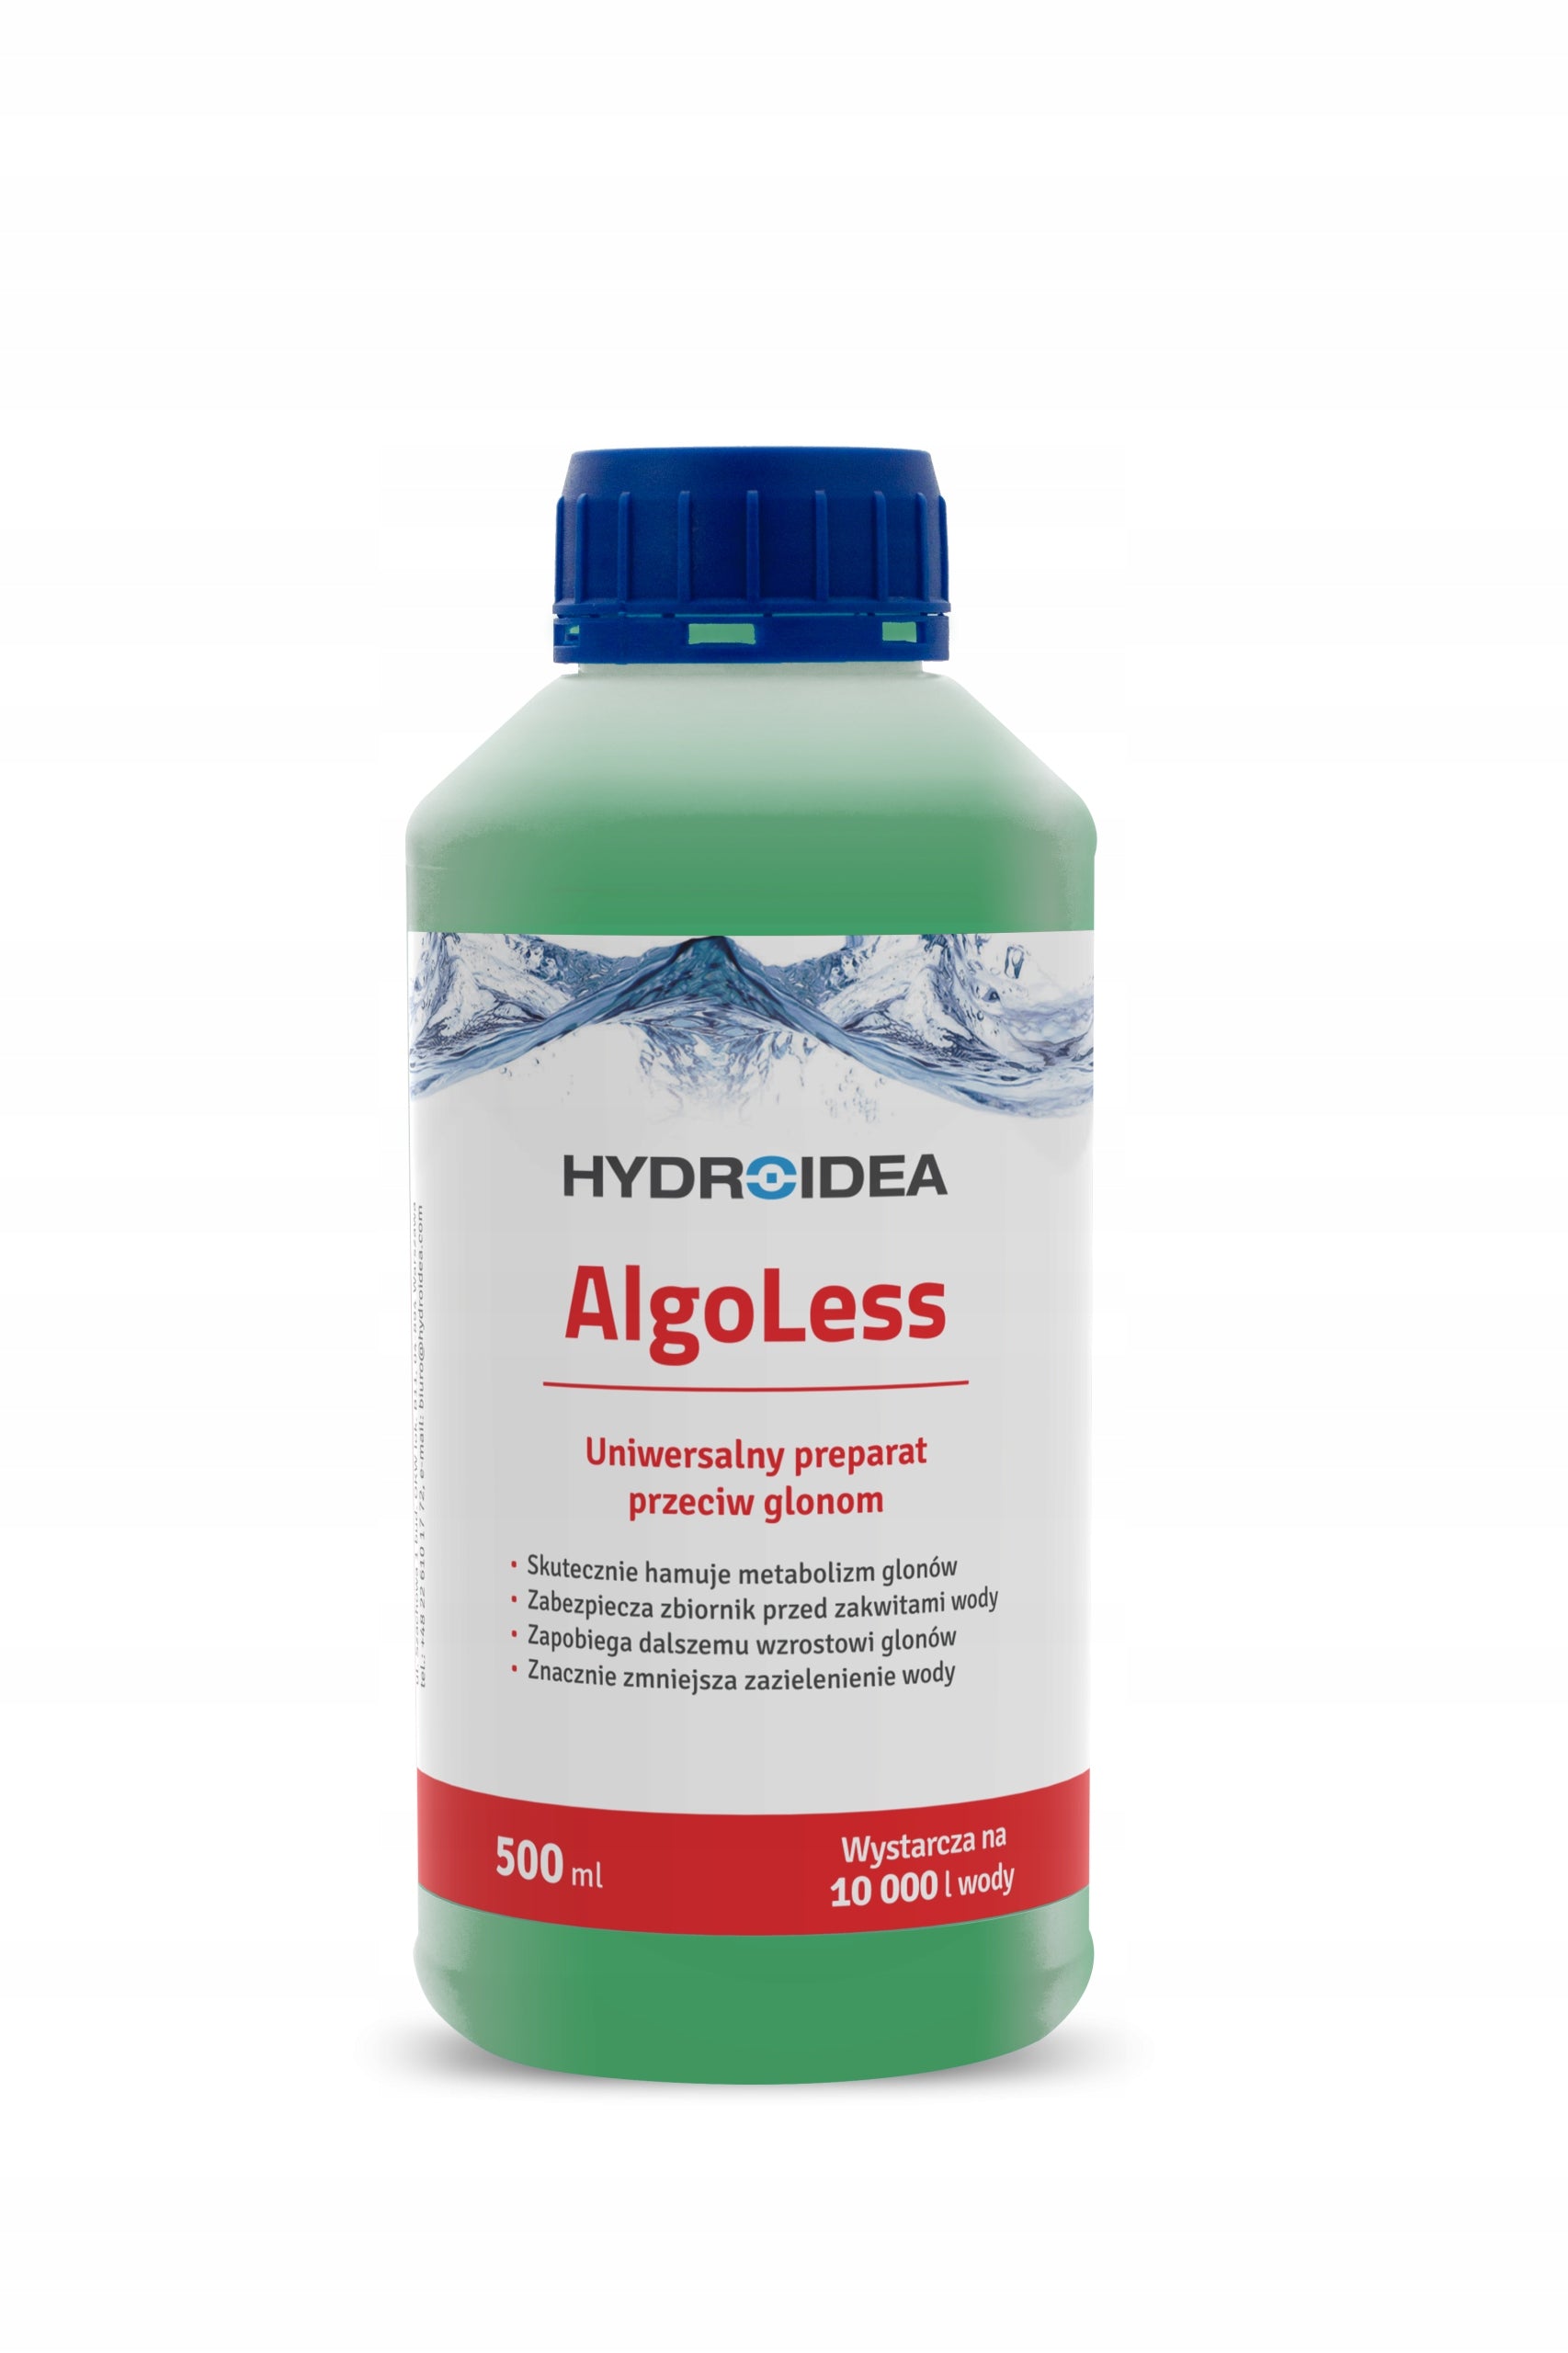 AlgoLess 500 ml (soluție limpezirea apei verzi profesionala)